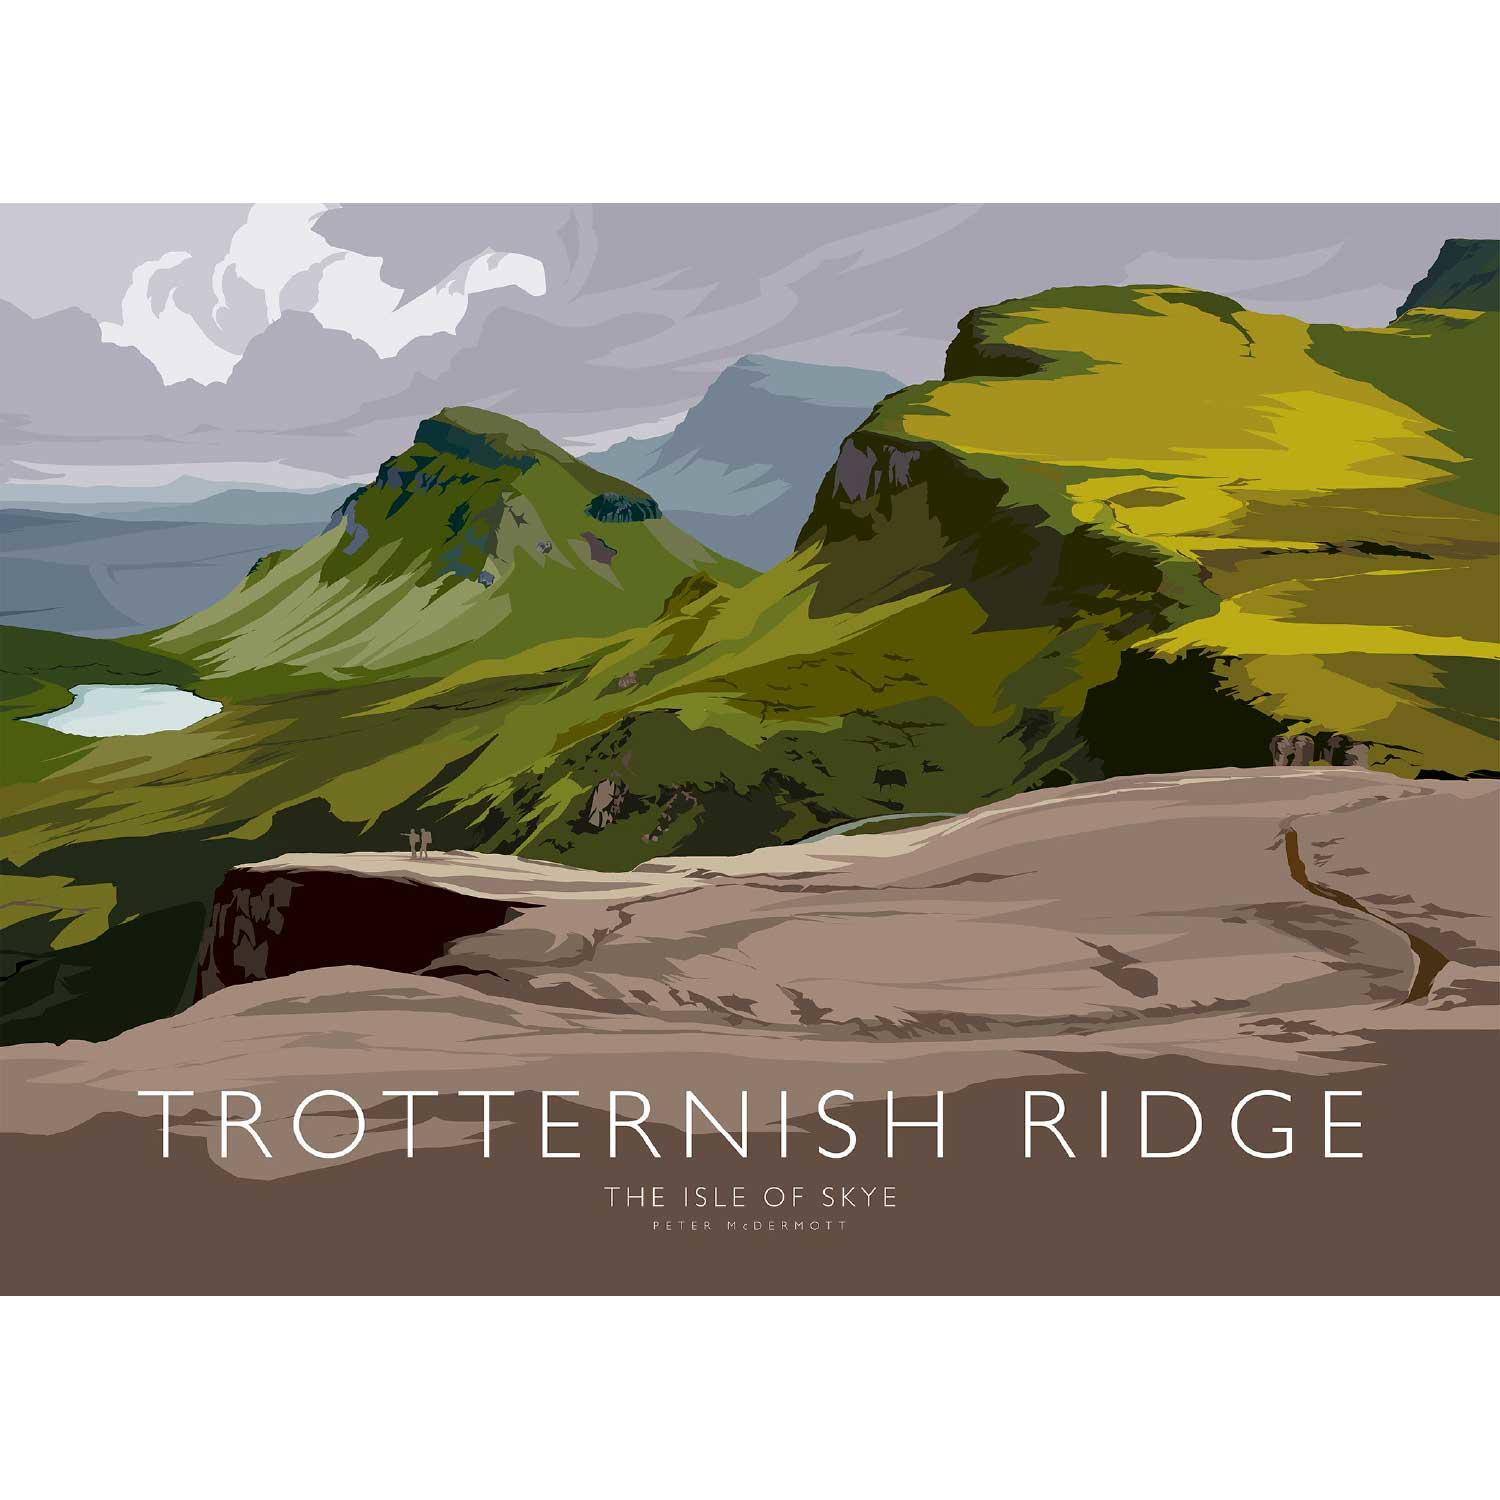 Trotternish Ridge by Peter McDermott